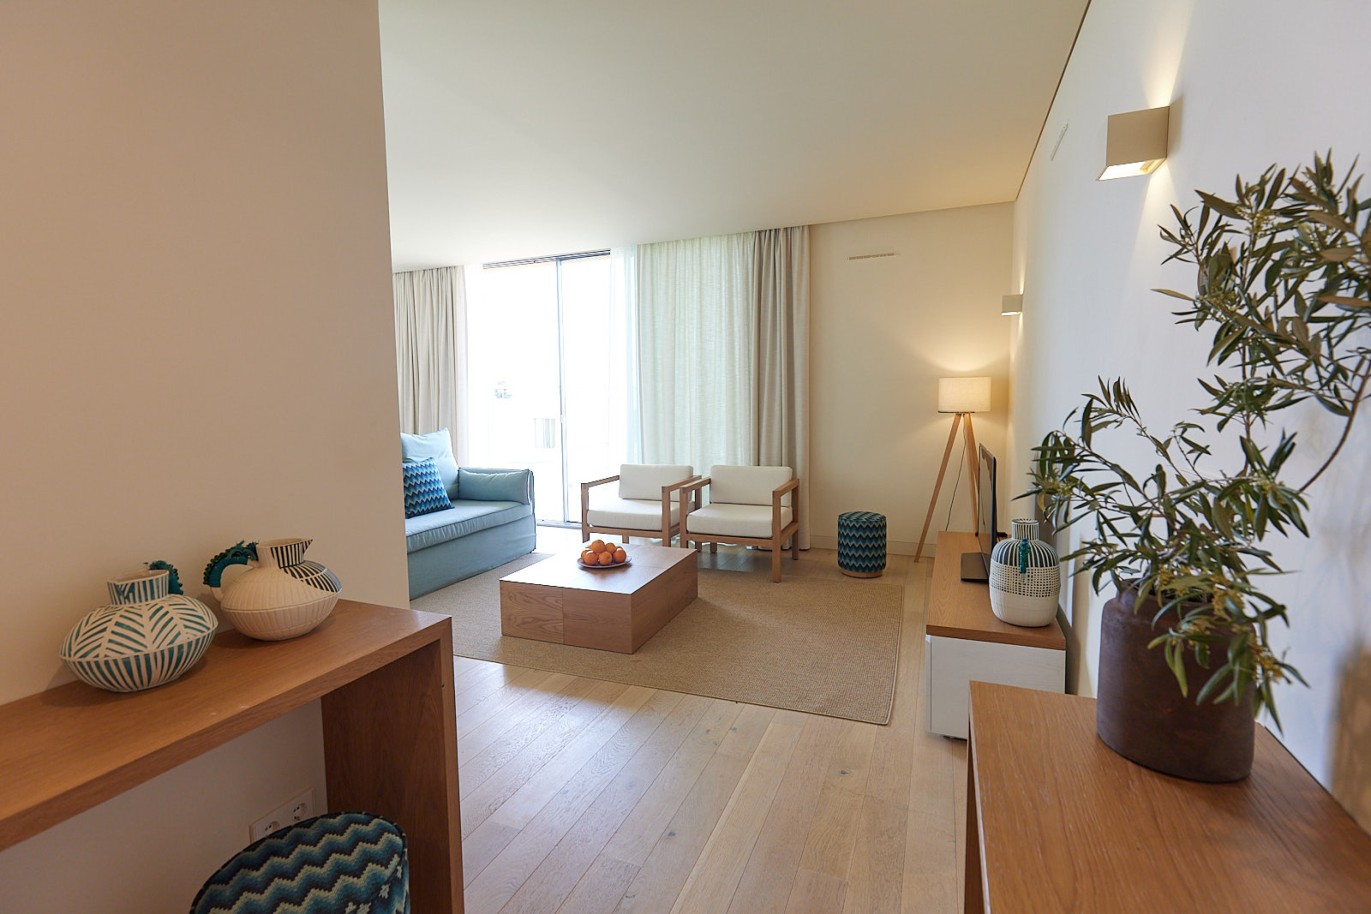 2 bedroom apartment in resort, for sale in Porches, Algarve_230570